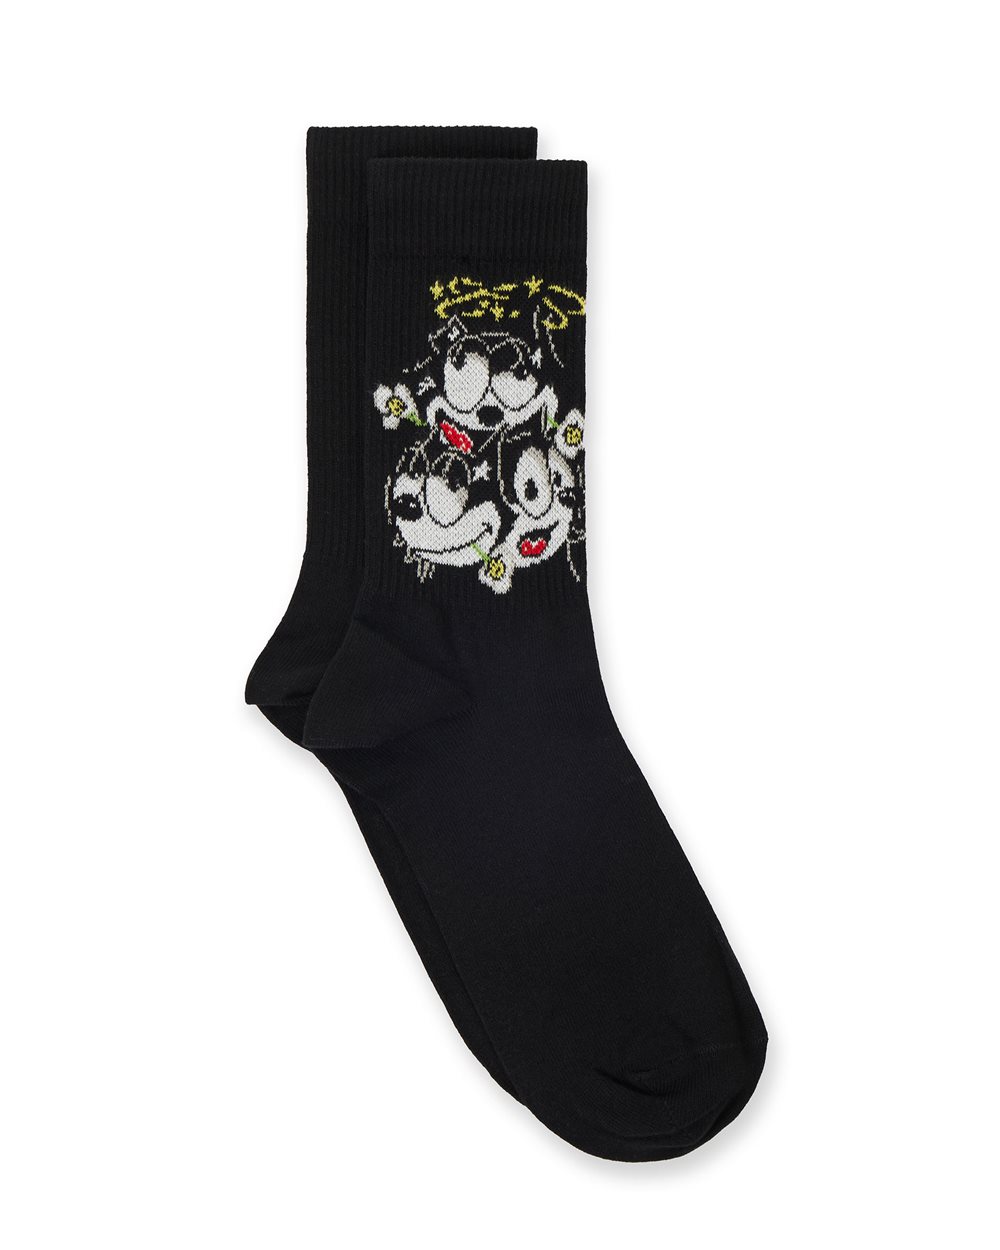 Sock with cartoon graphics - socks | Iceberg - Official Website